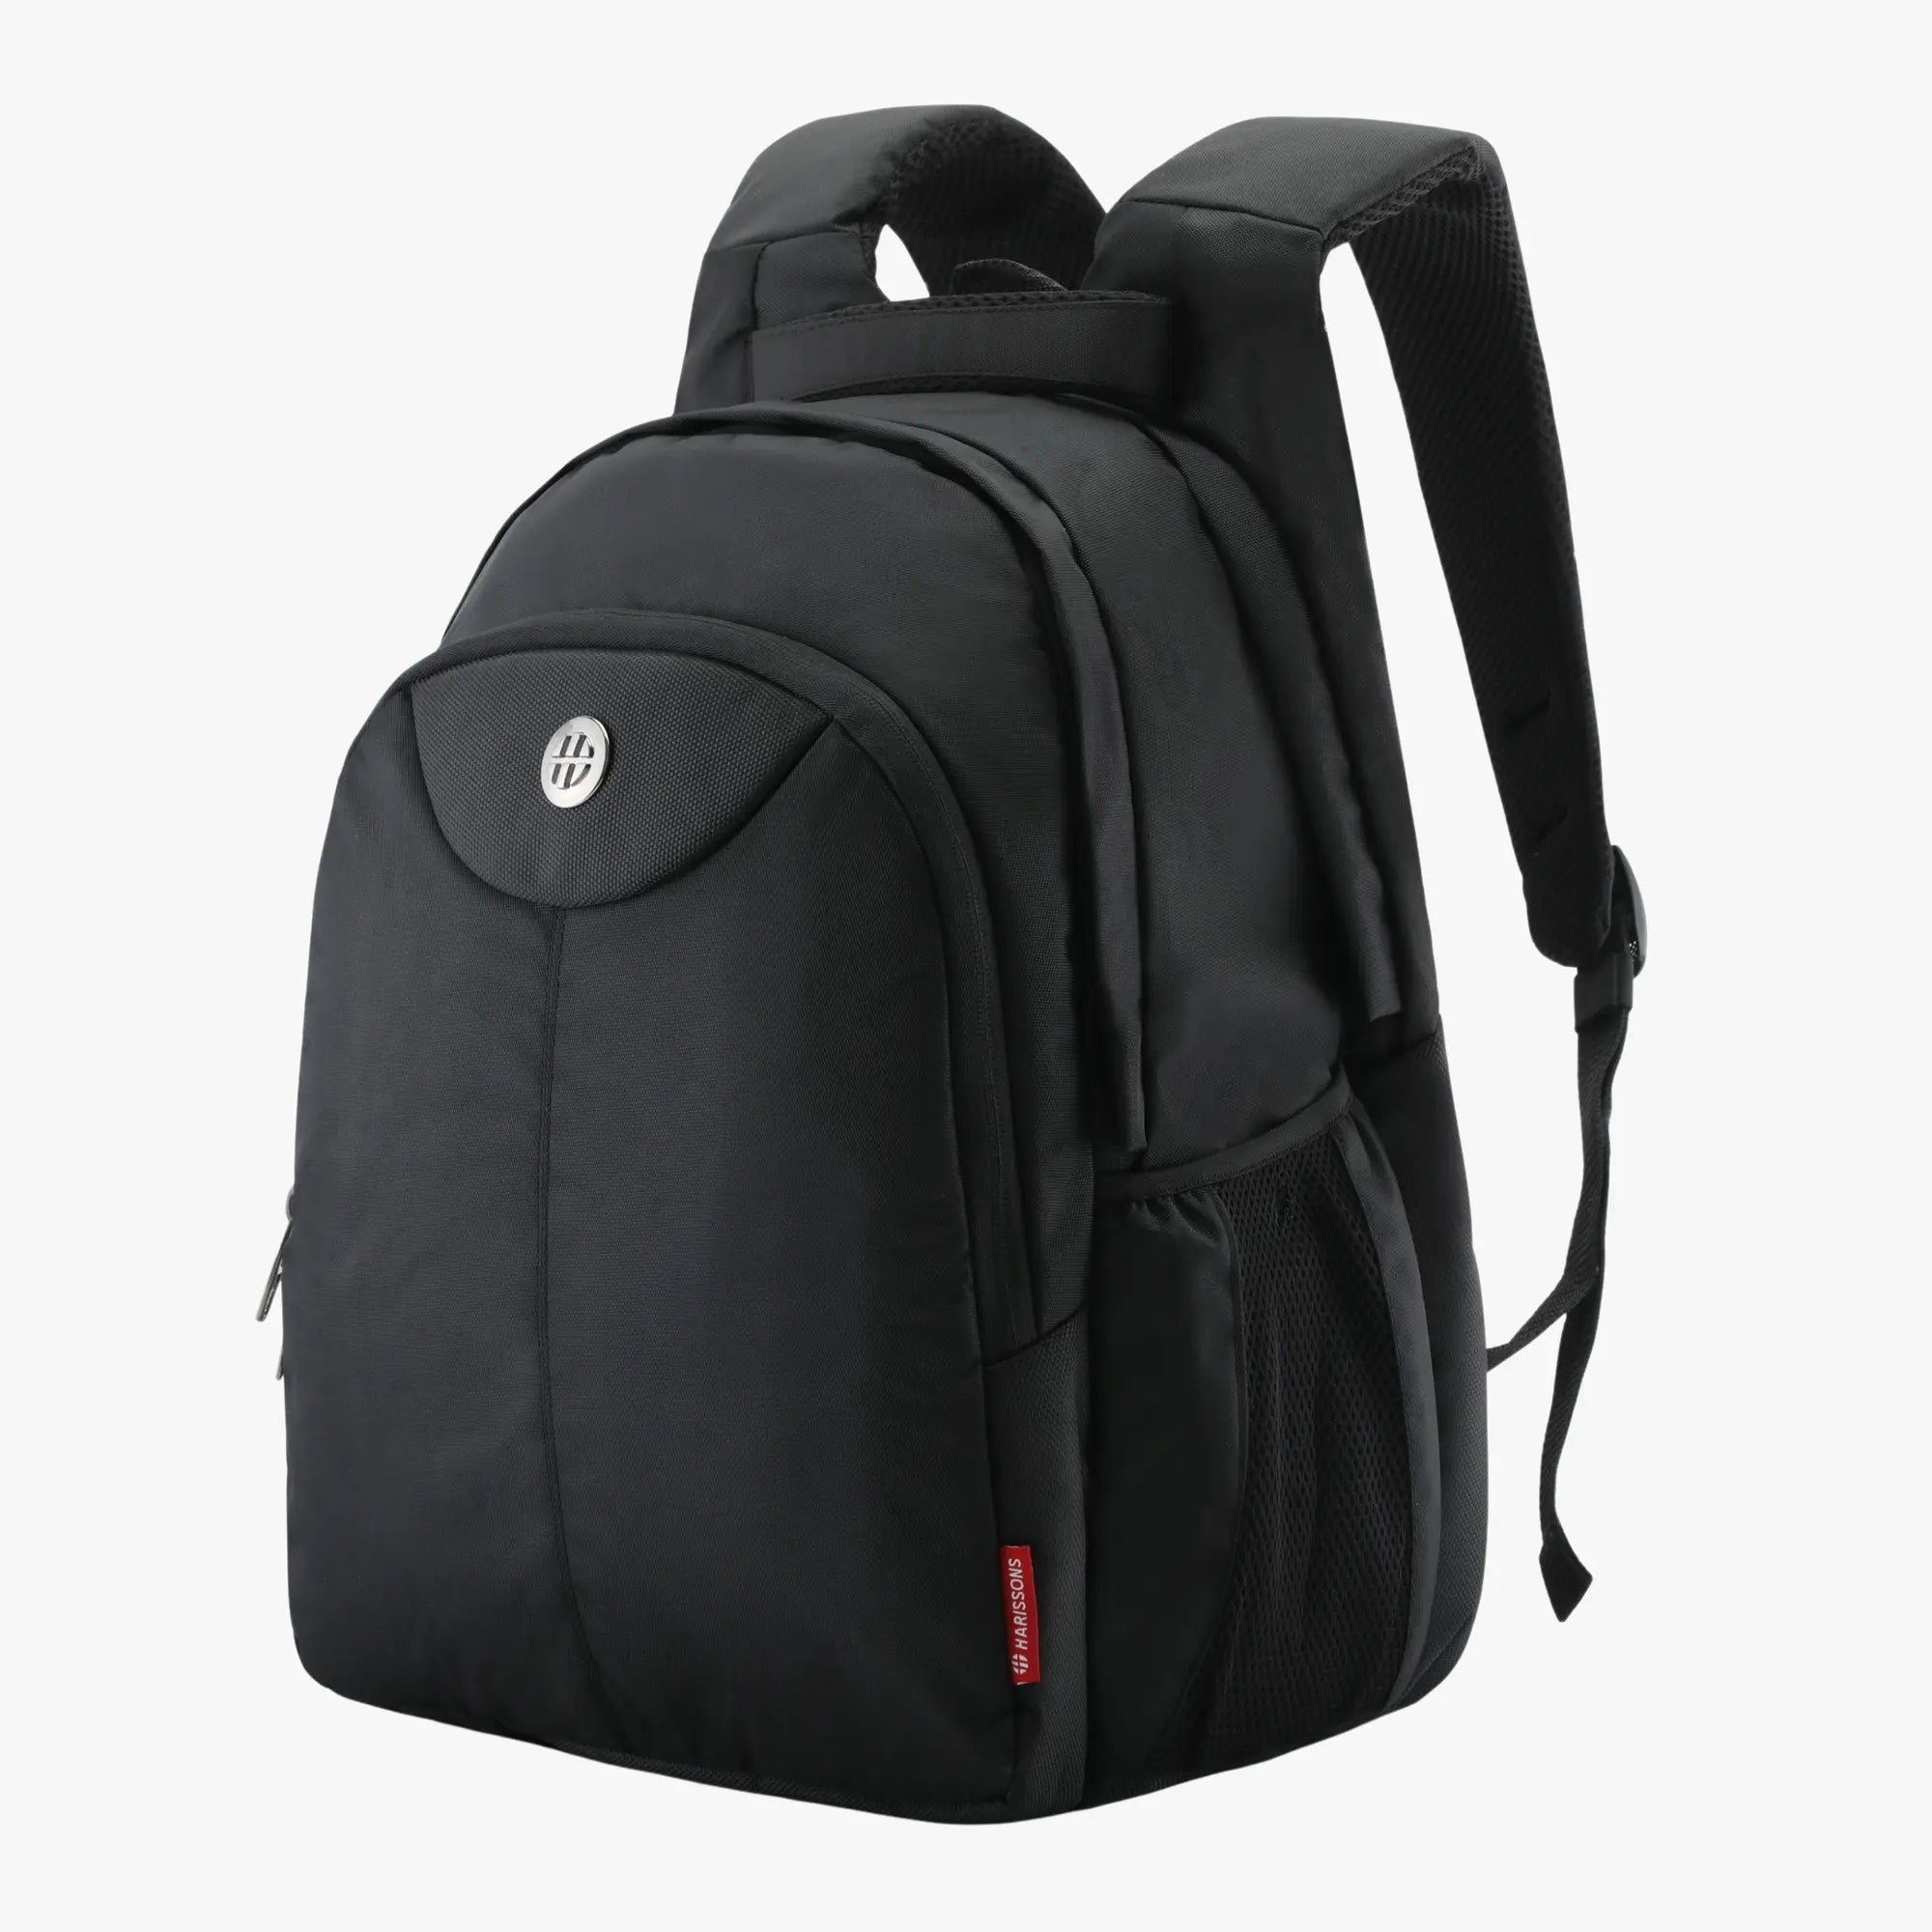 AZZARO - Premium Laptop Backpack